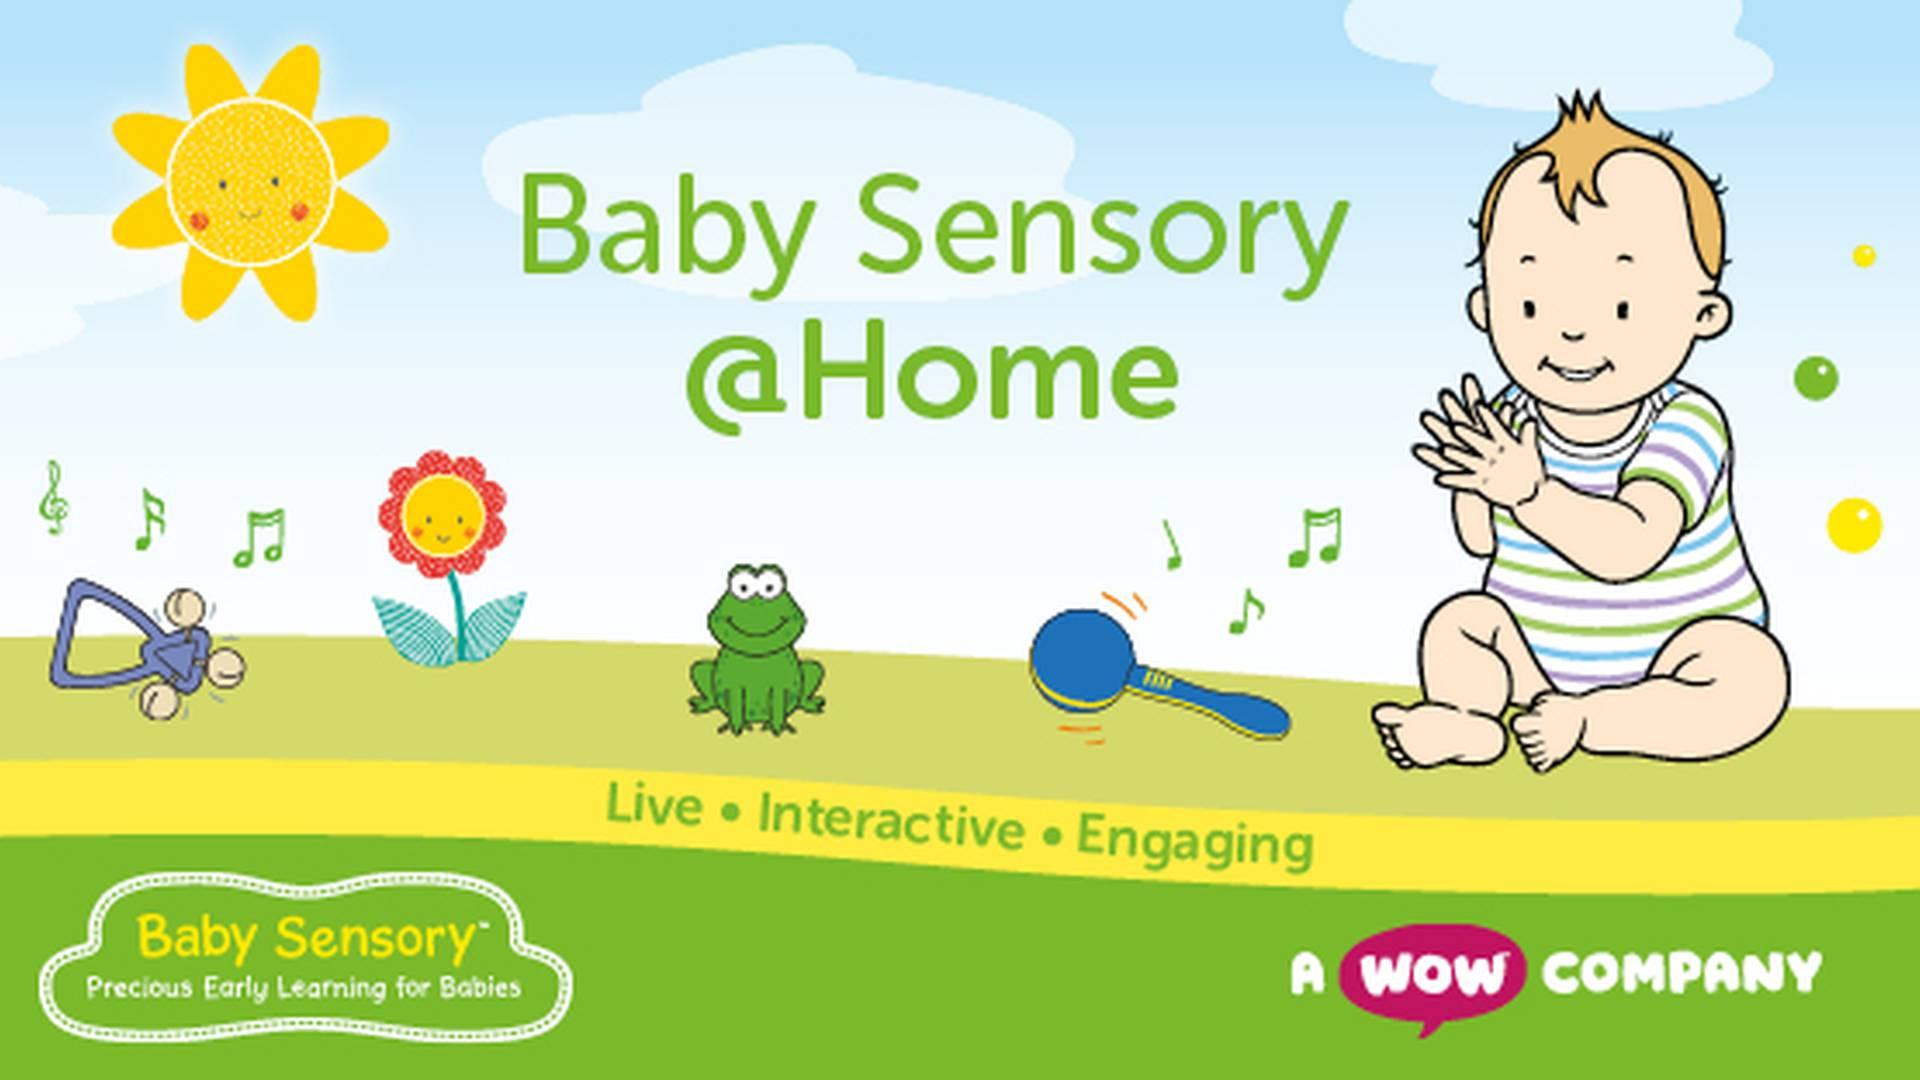 Baby Sensory and Hello Baby Massage photo